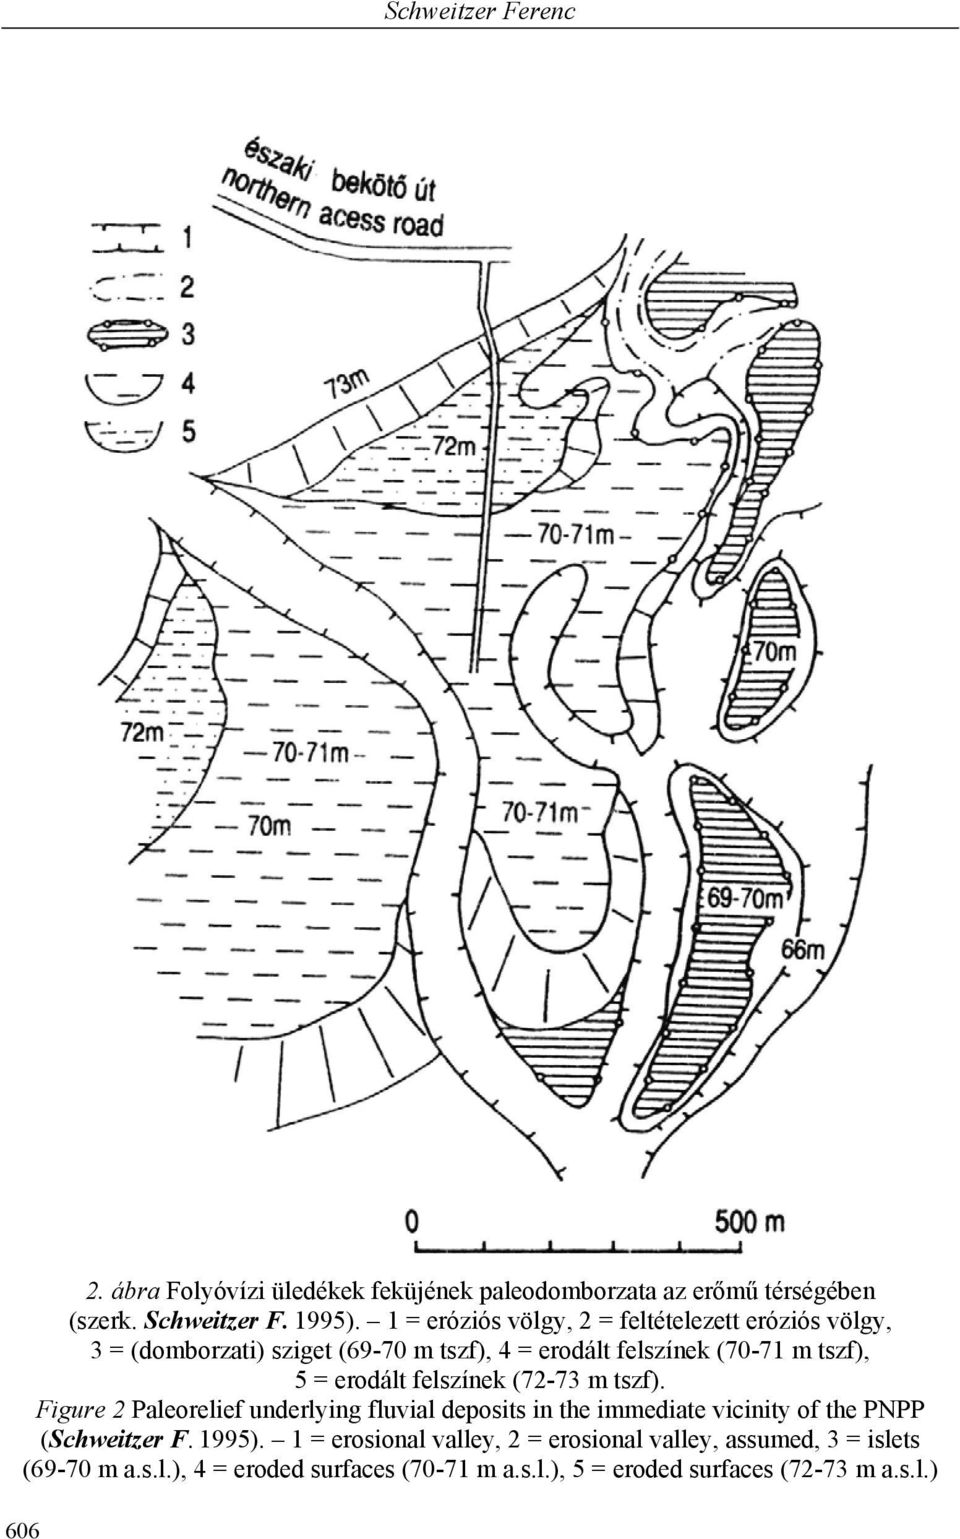 erodált felszínek (72-73 m tszf). Figure 2 Paleorelief underlying fluvial deposits in the immediate vicinity of the PNPP (Schweitzer F.